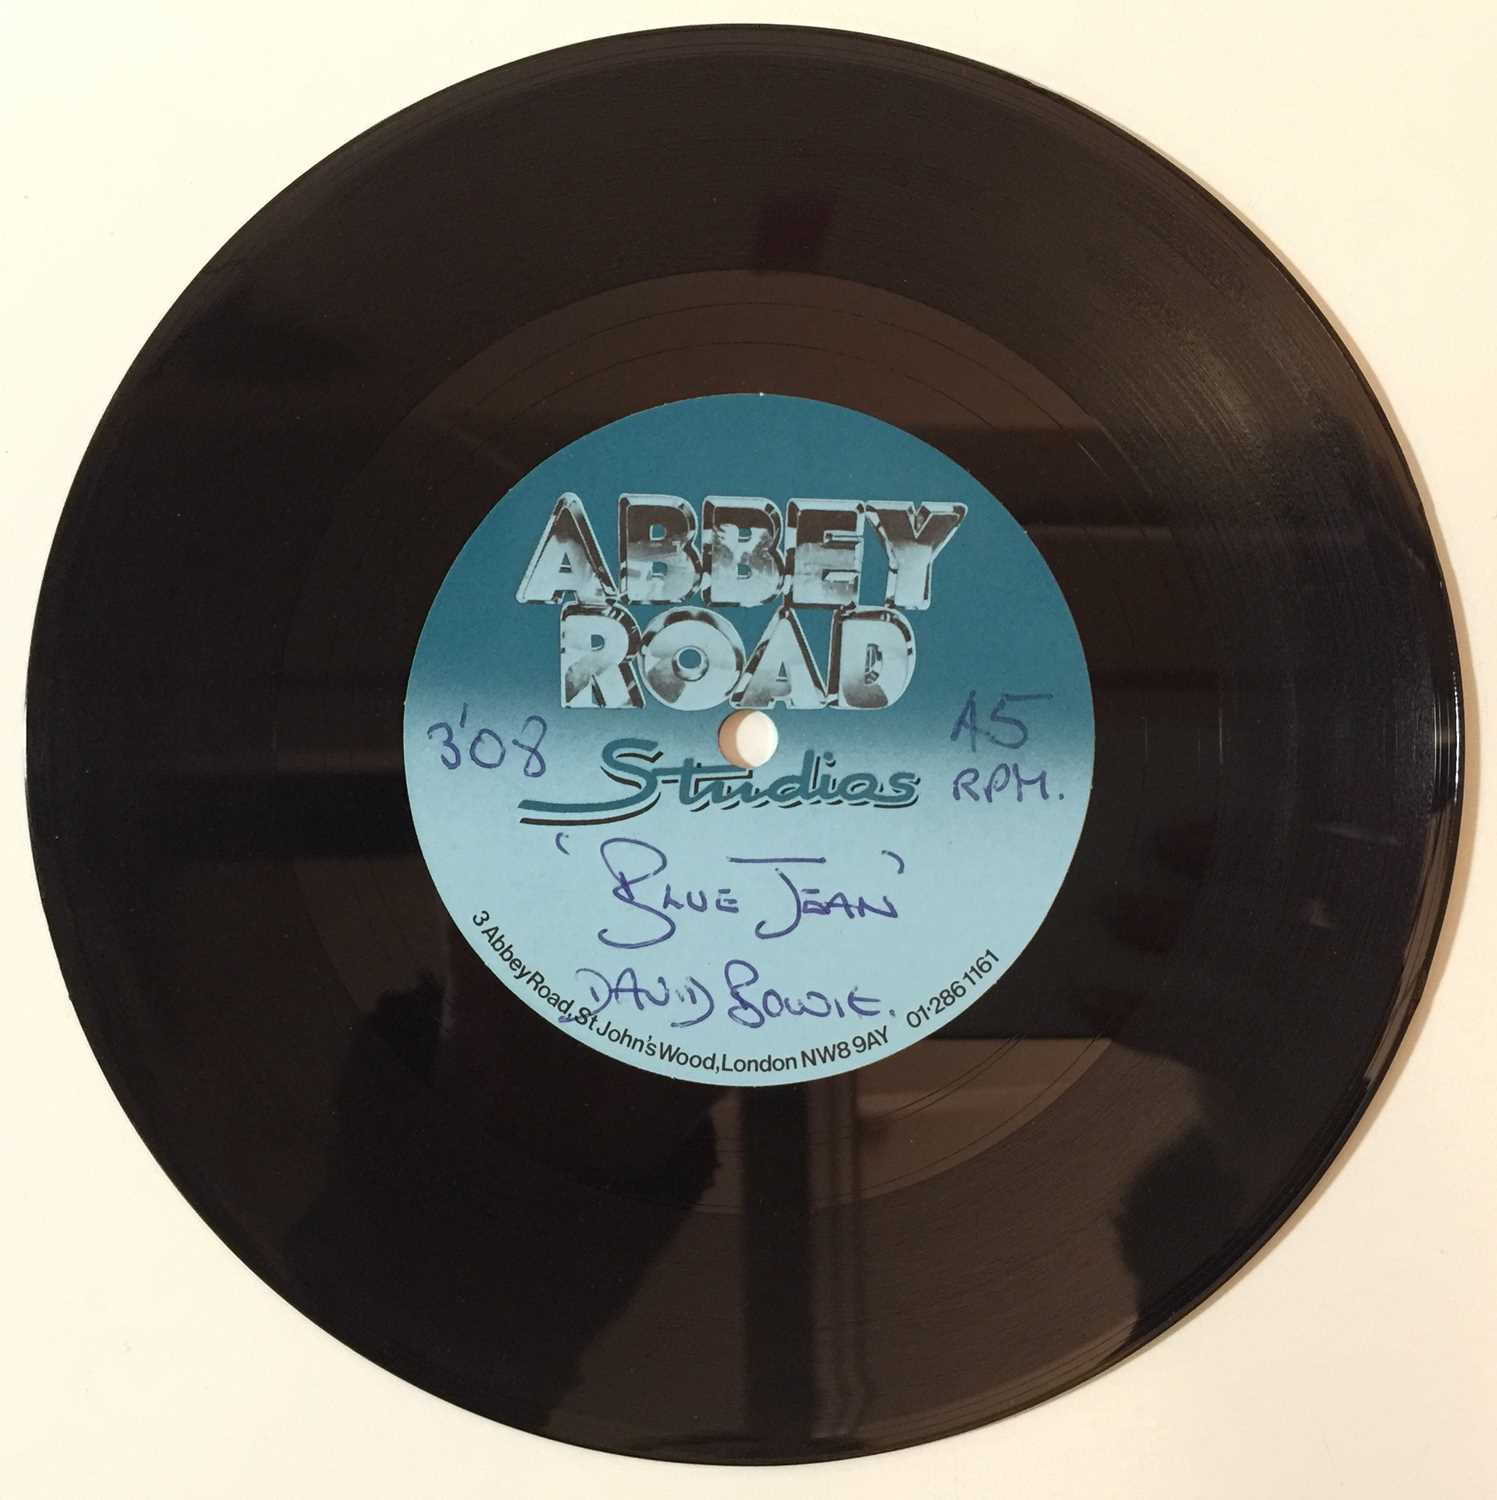 Lot 45 - David Bowie - Blue Jean 7" (Abbey Road Acetate)